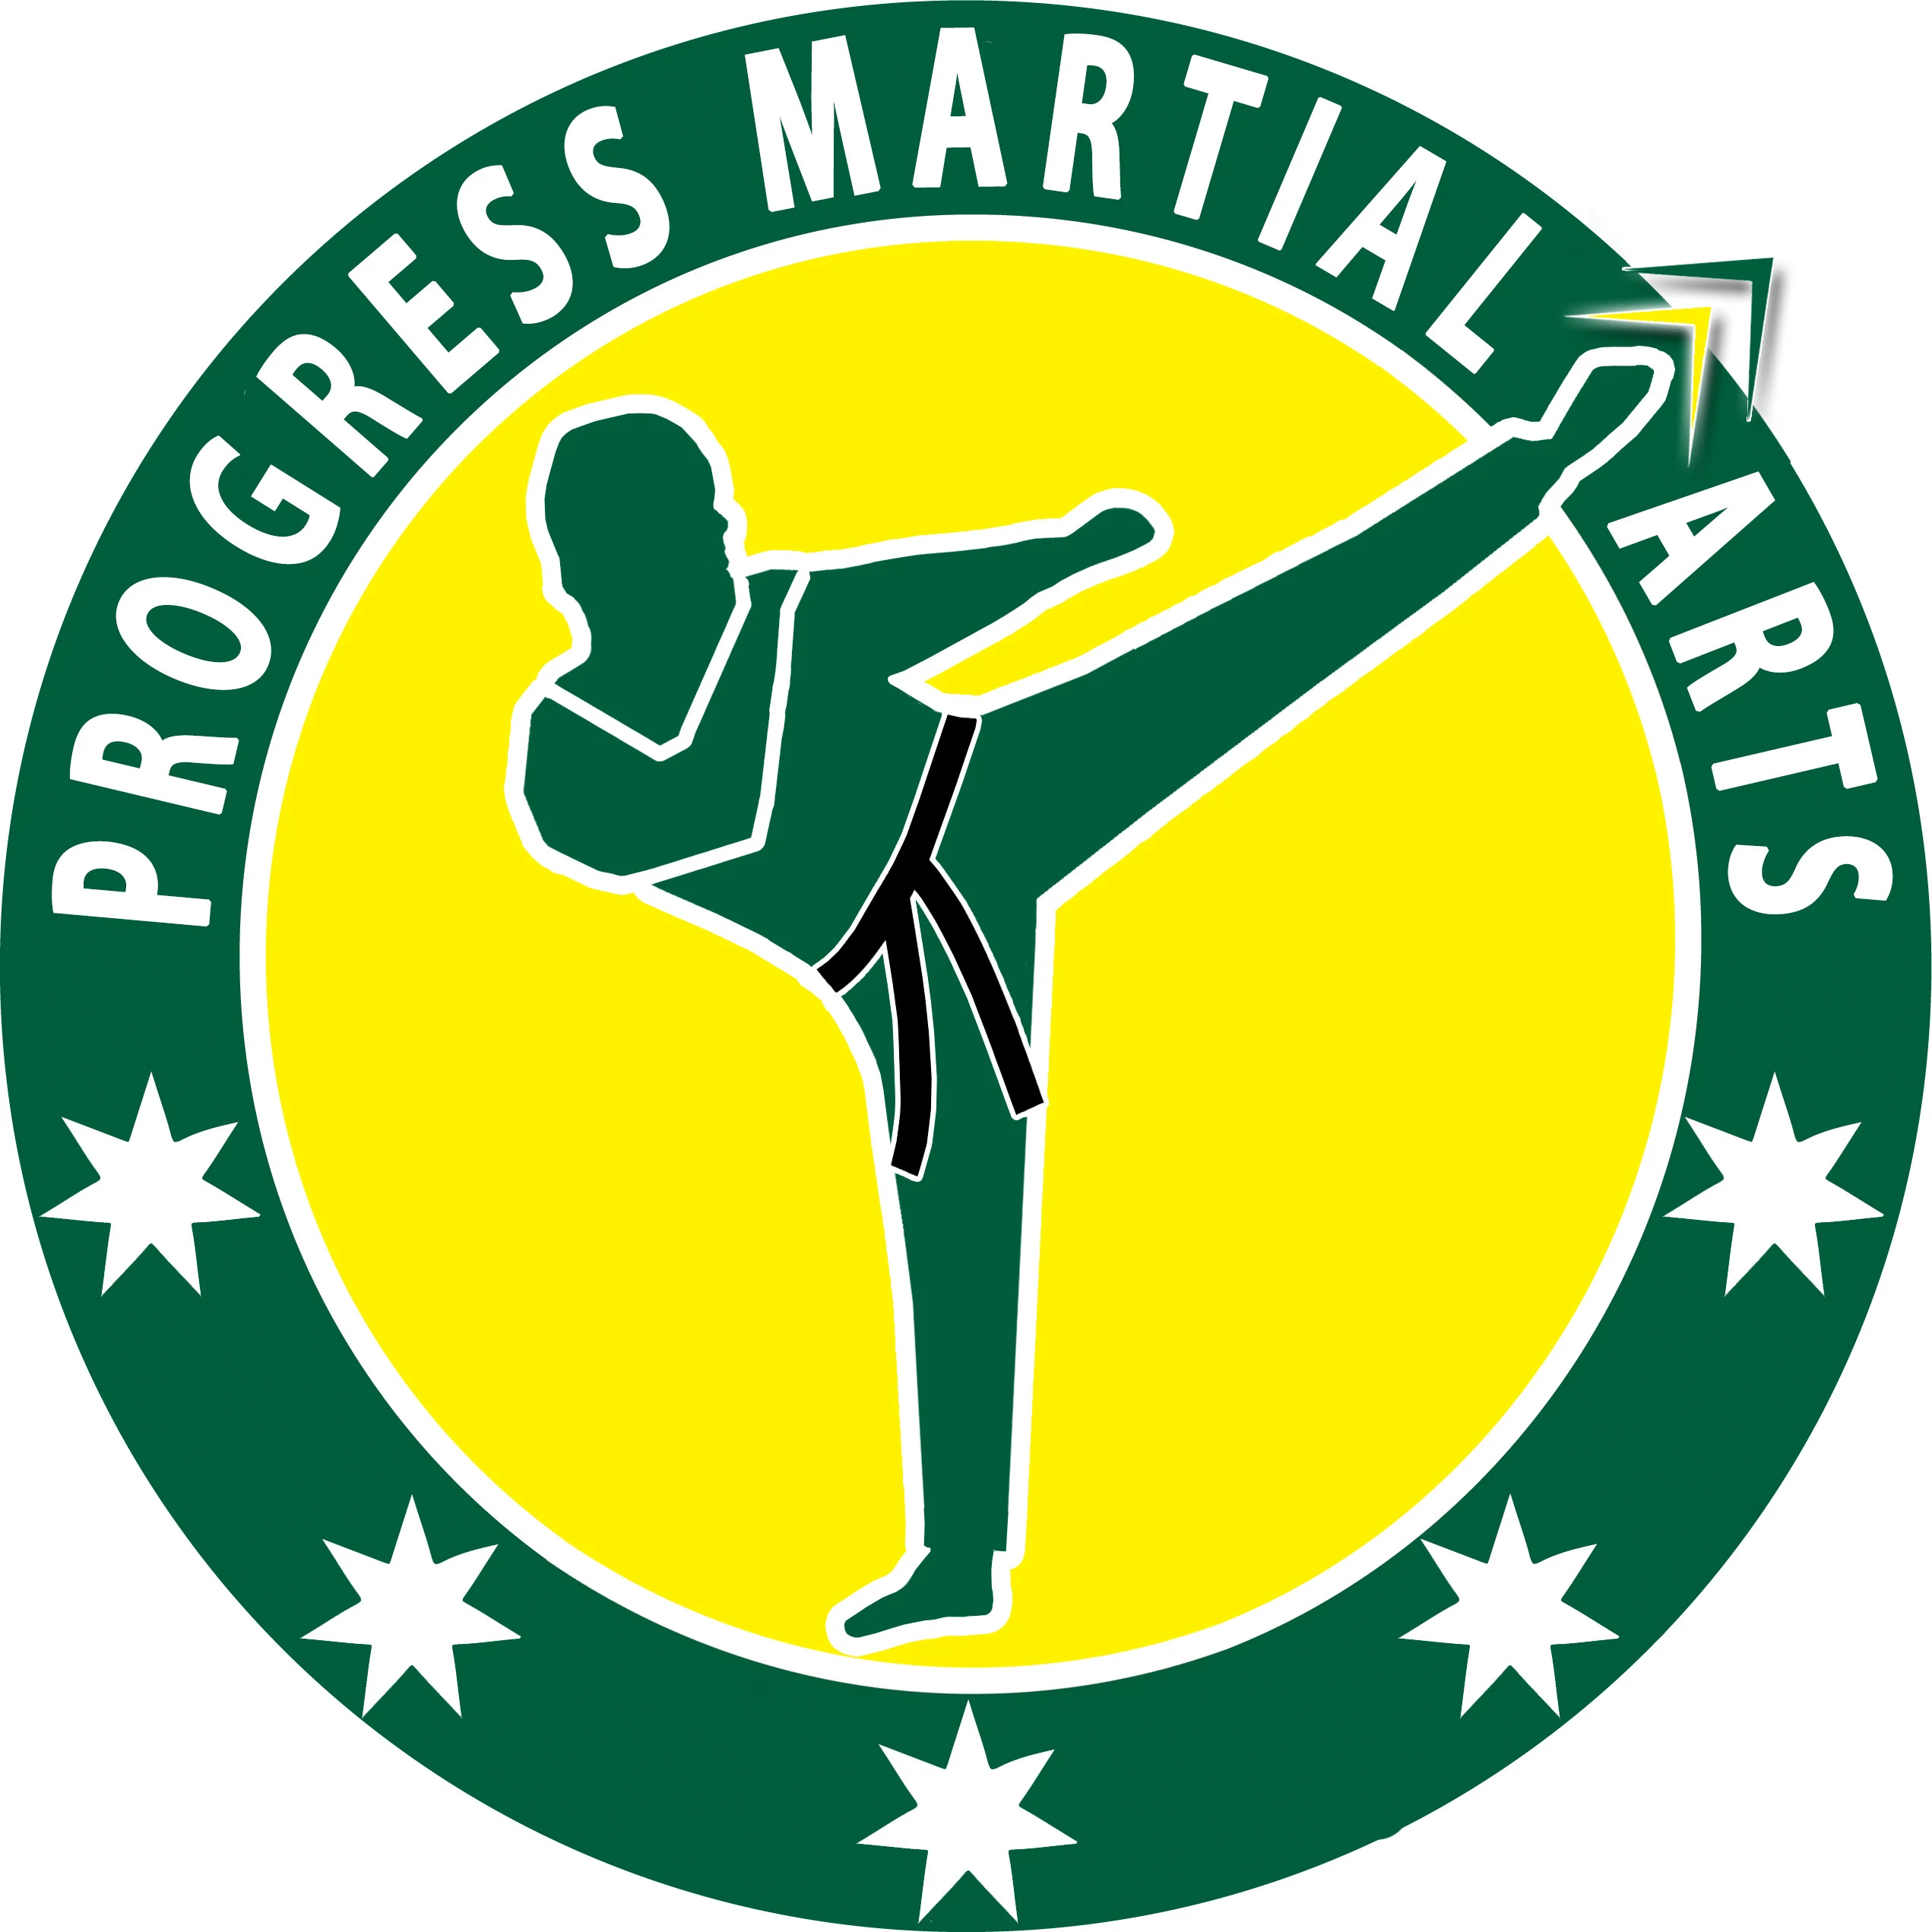 Progress Taekwondo Martial Arts in Craigieburn for Kids & Teens 3-6 Years & 7-13 - Self Defence